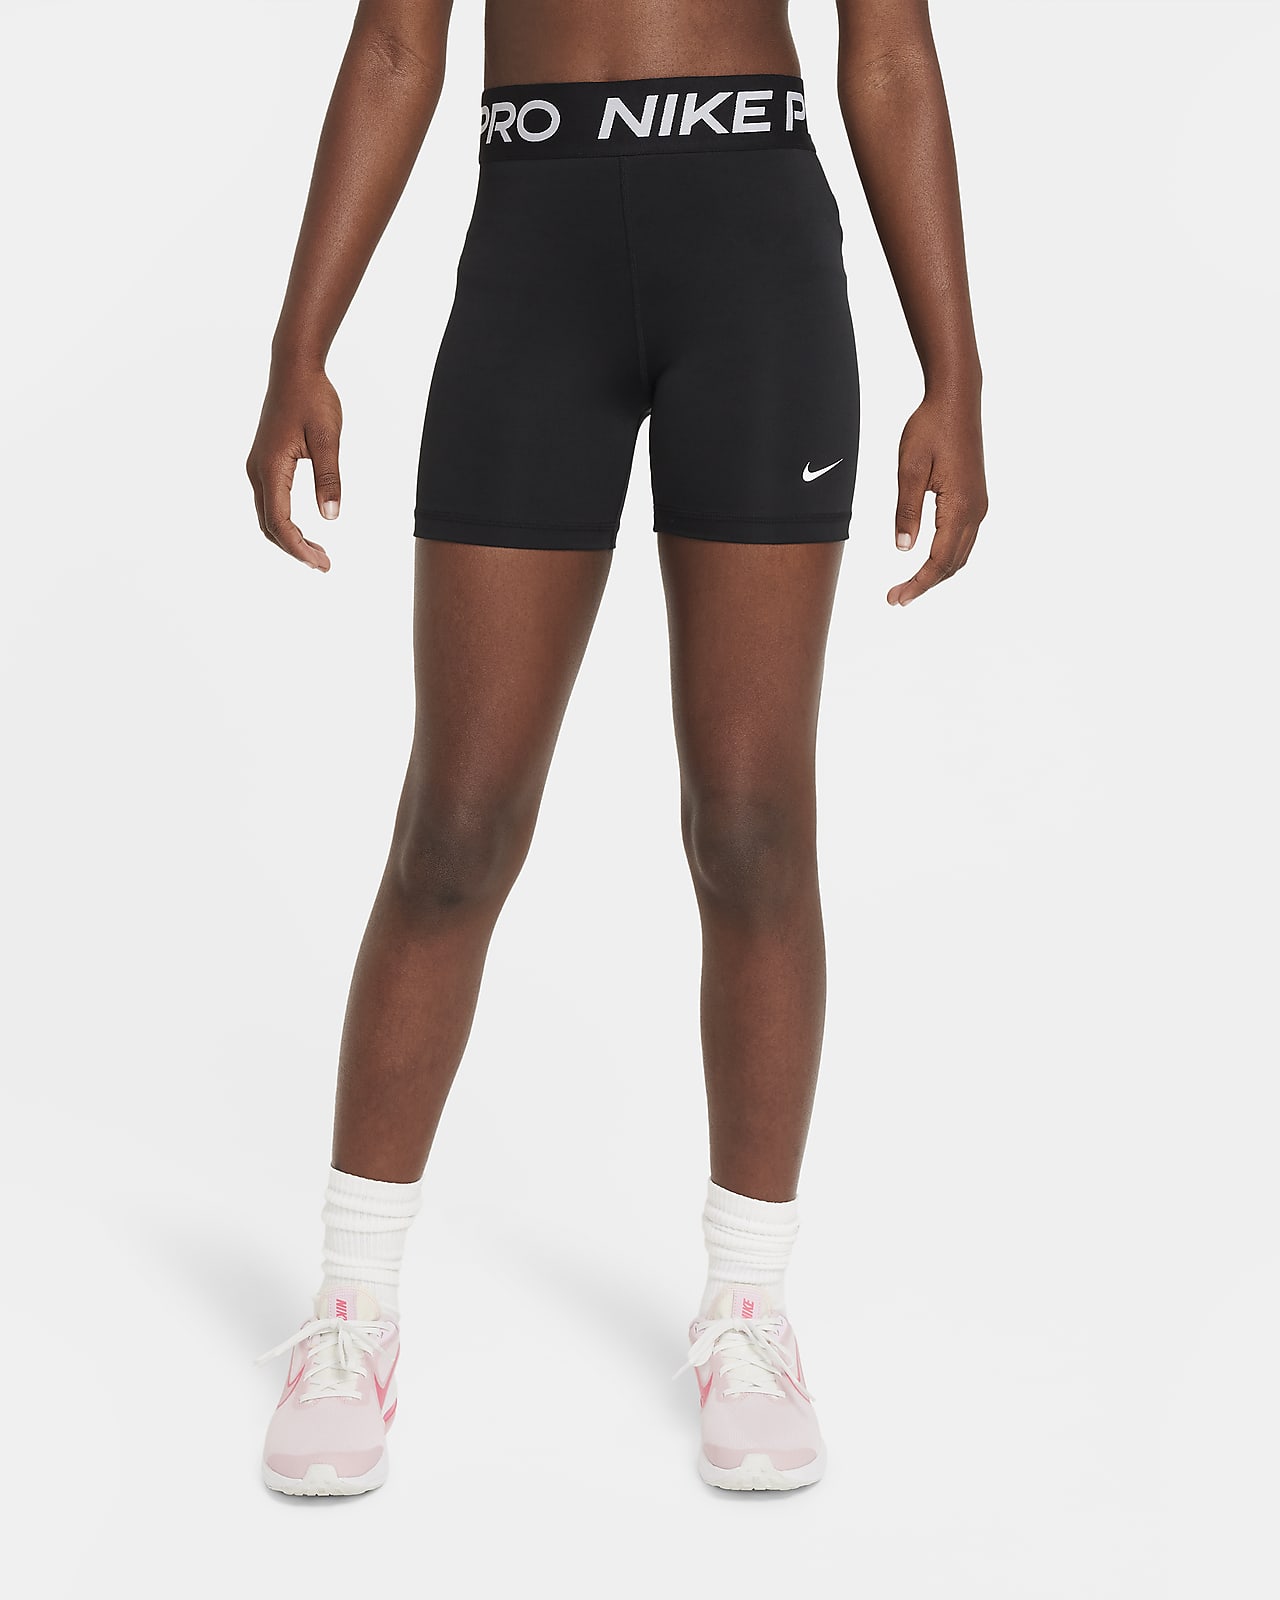 Acurrucarse batería suficiente Nike Pro Big Kids' (Girls') 3" Shorts. Nike.com